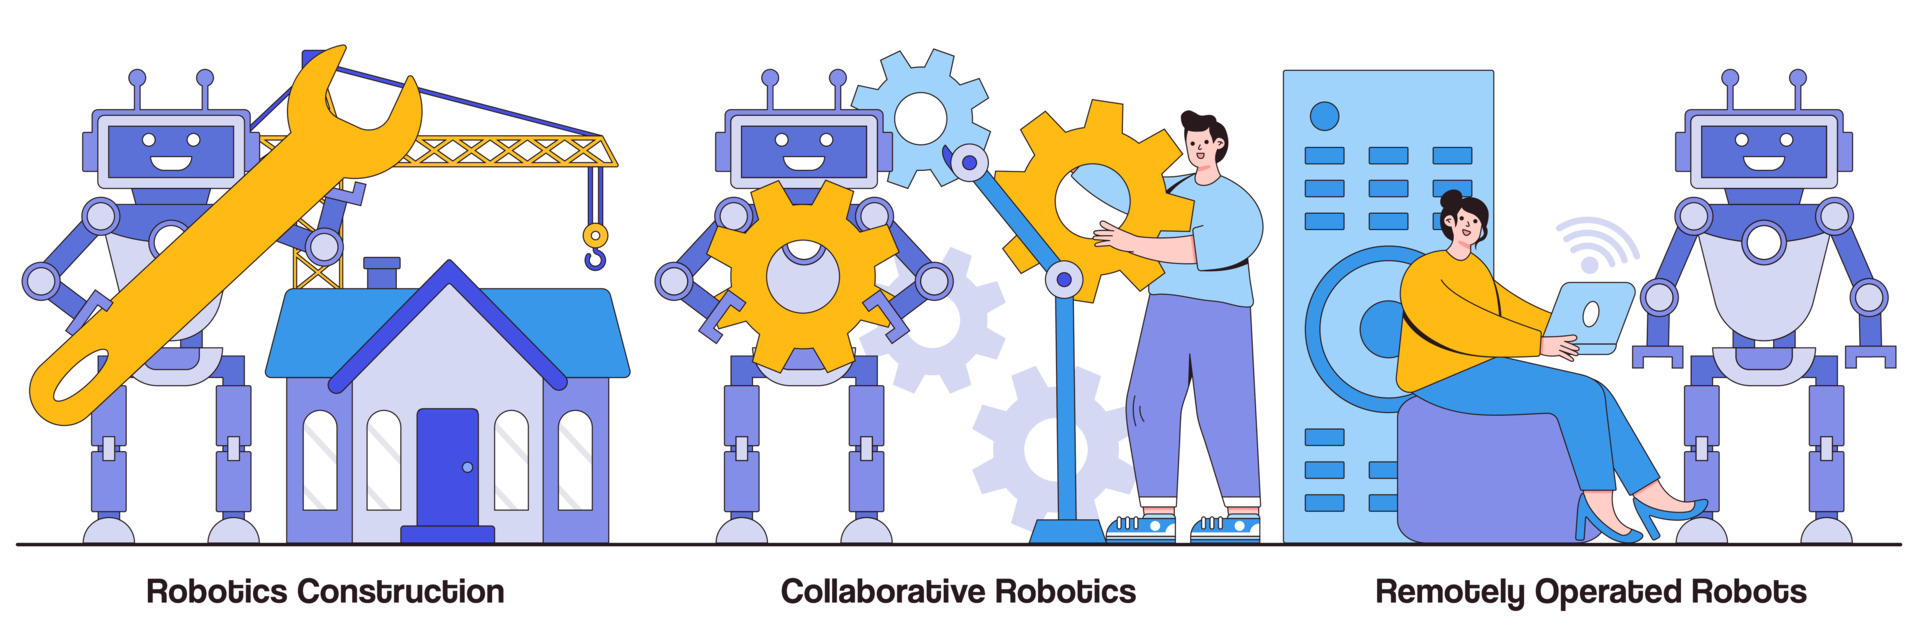 Robotics Construction, Collaborative Robotics, and Remotely Operated ...